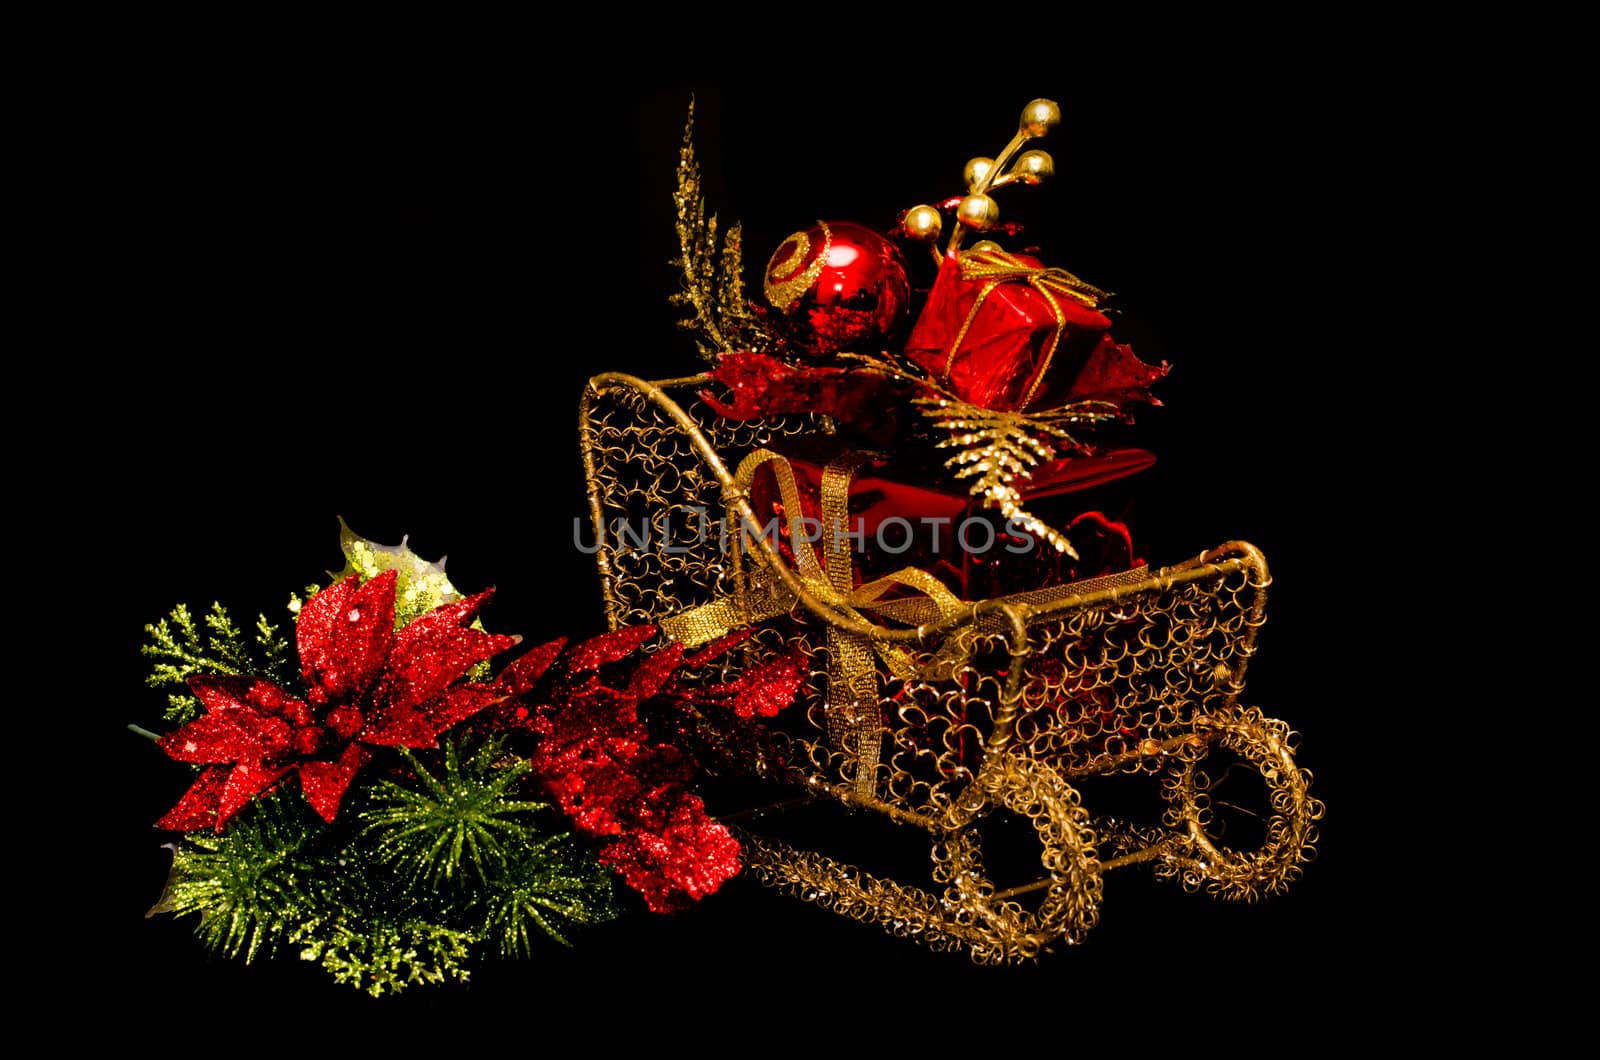 Christmas gift on sleigh on black background.